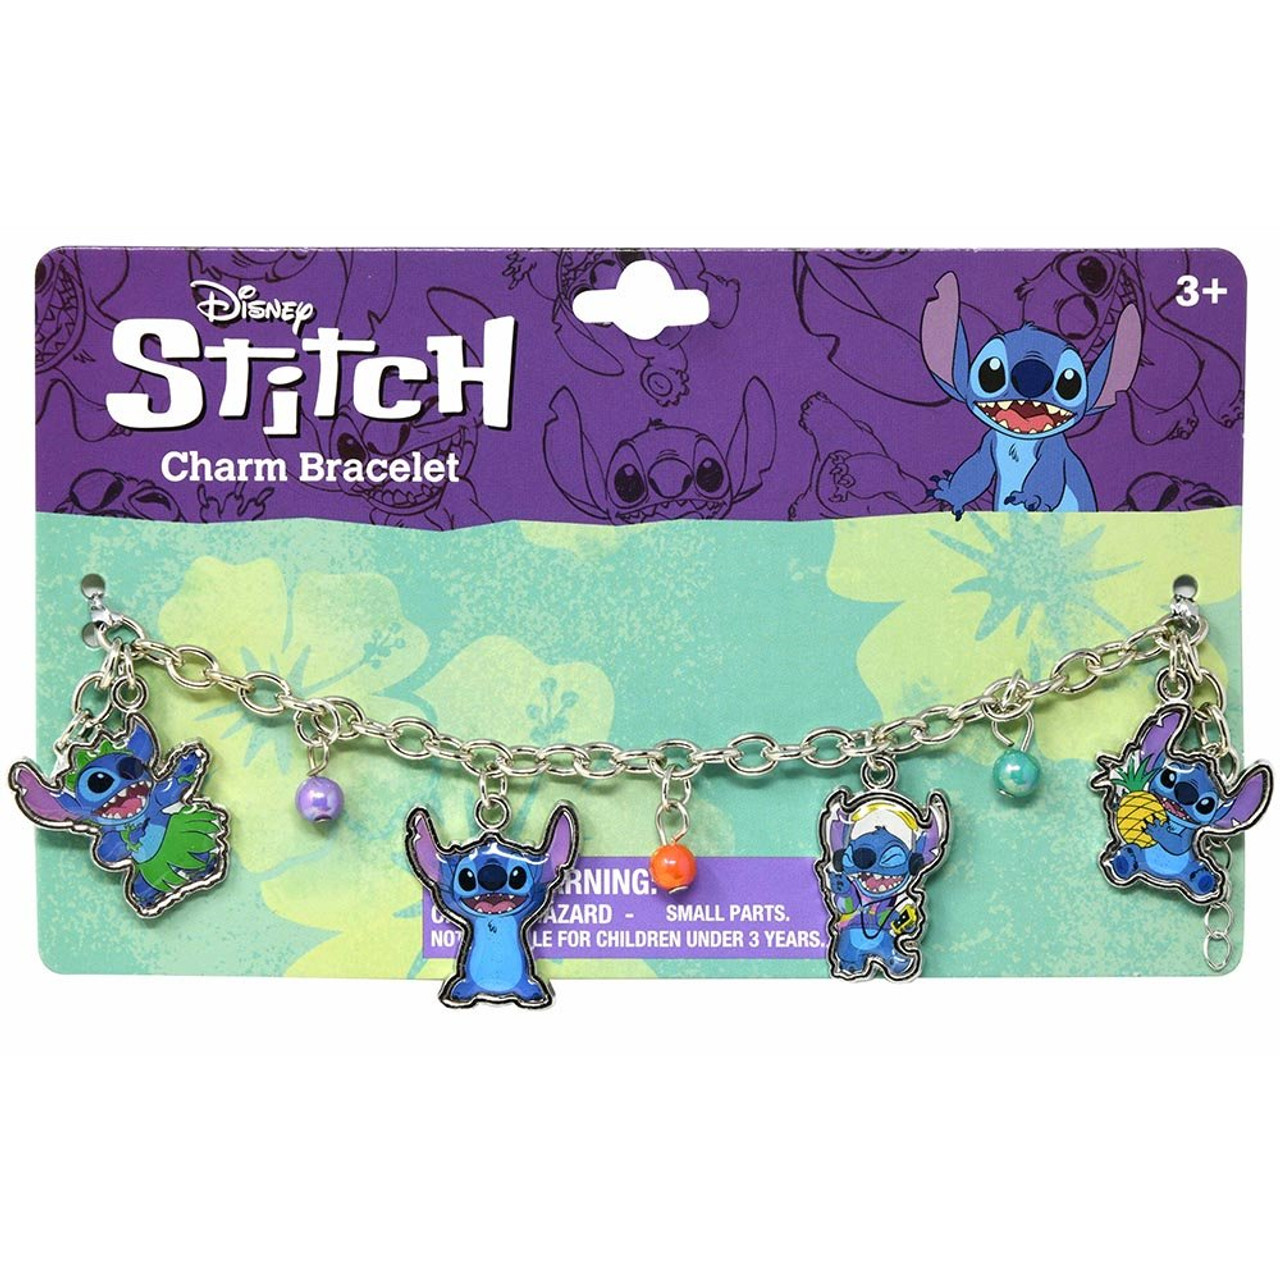 Disney Stitch Mix And Match Charm Bracelet